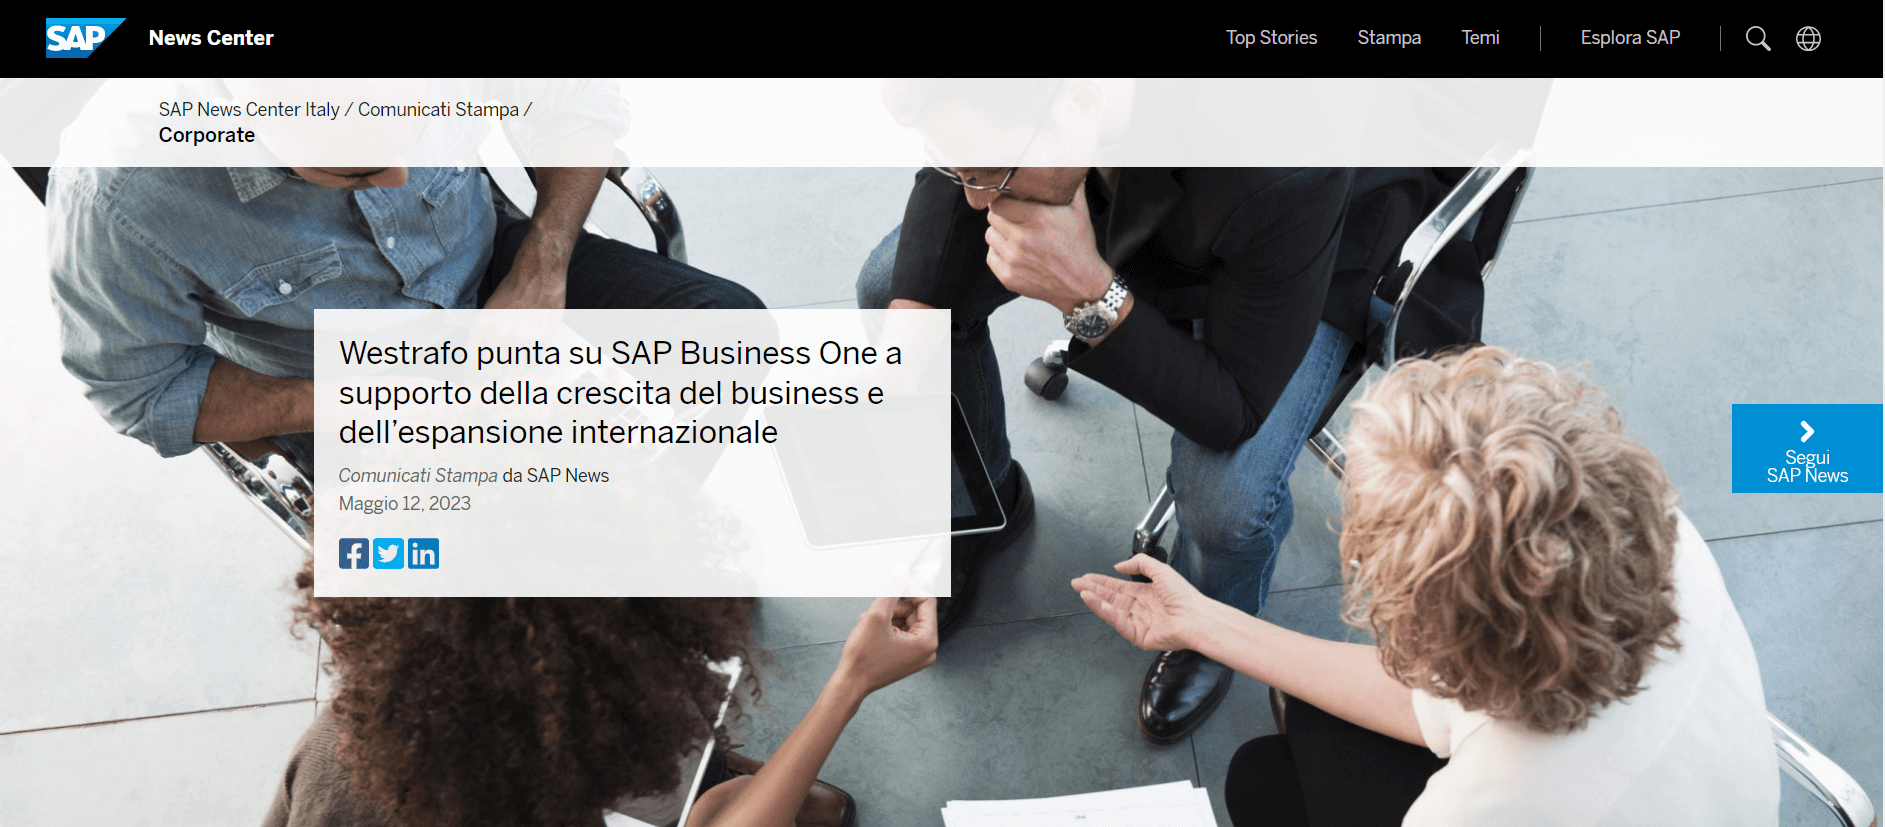 Westrafo punta su SAP Business One | Comunicato Stampa SAP